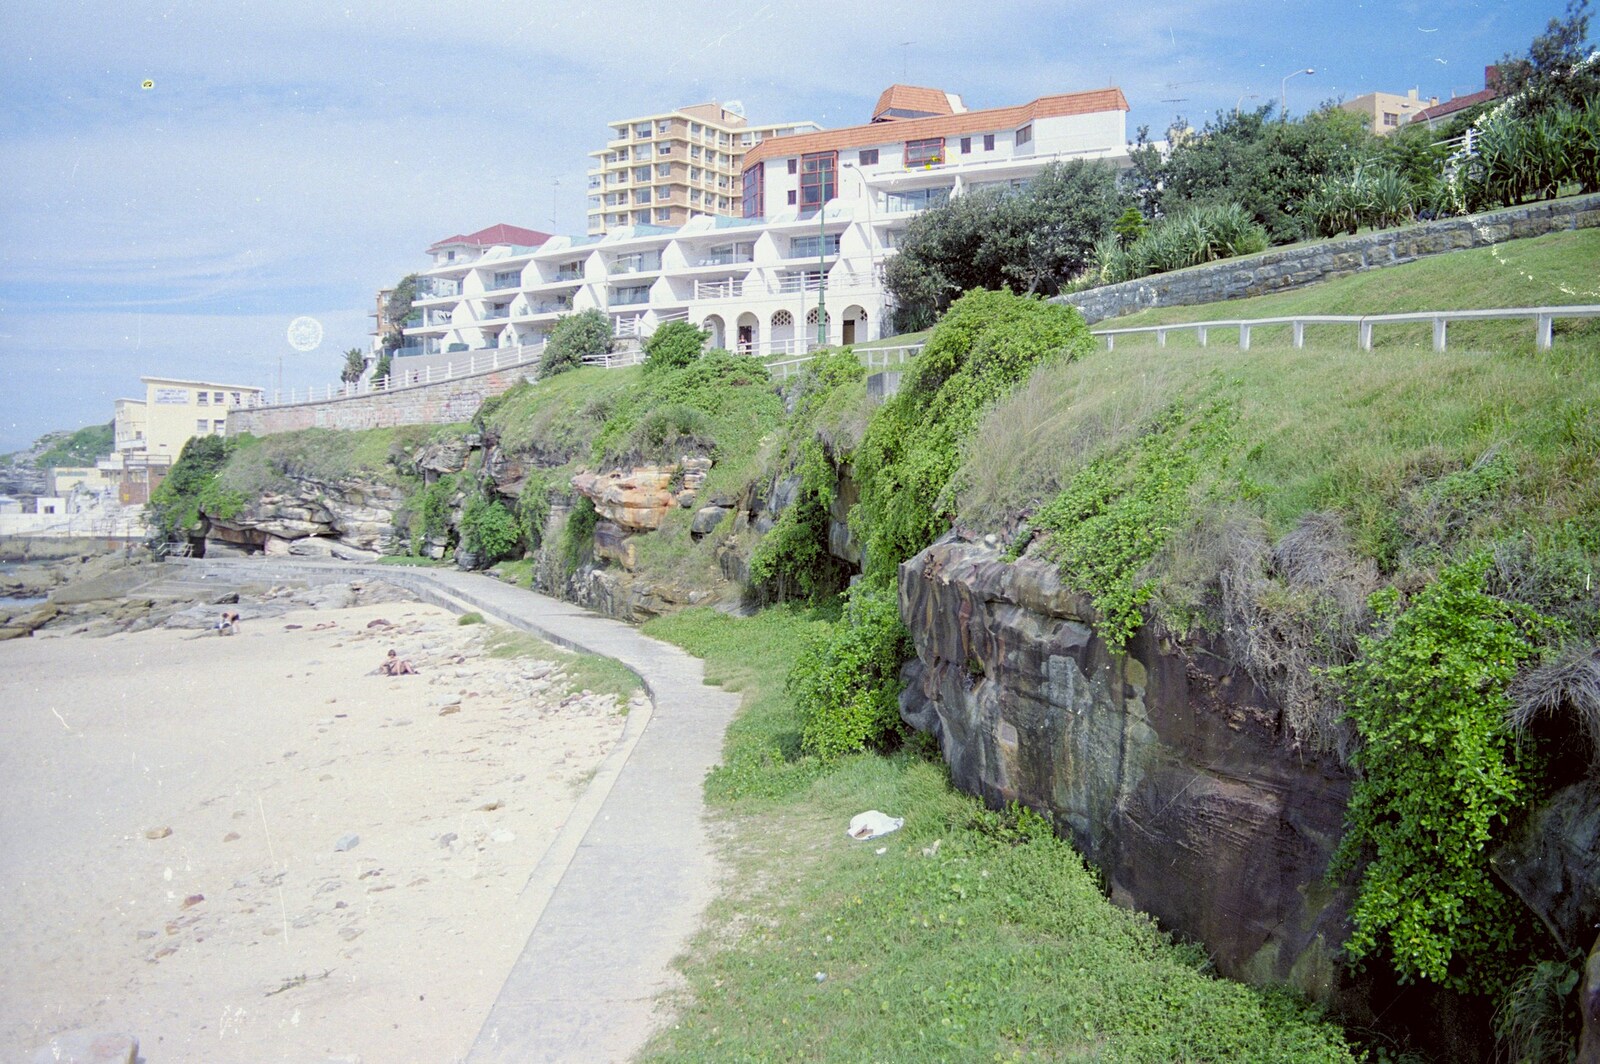 The cliffs and apartments of Bondi from Sydney Triathlon, Sydney, Australia - 16th April 2000